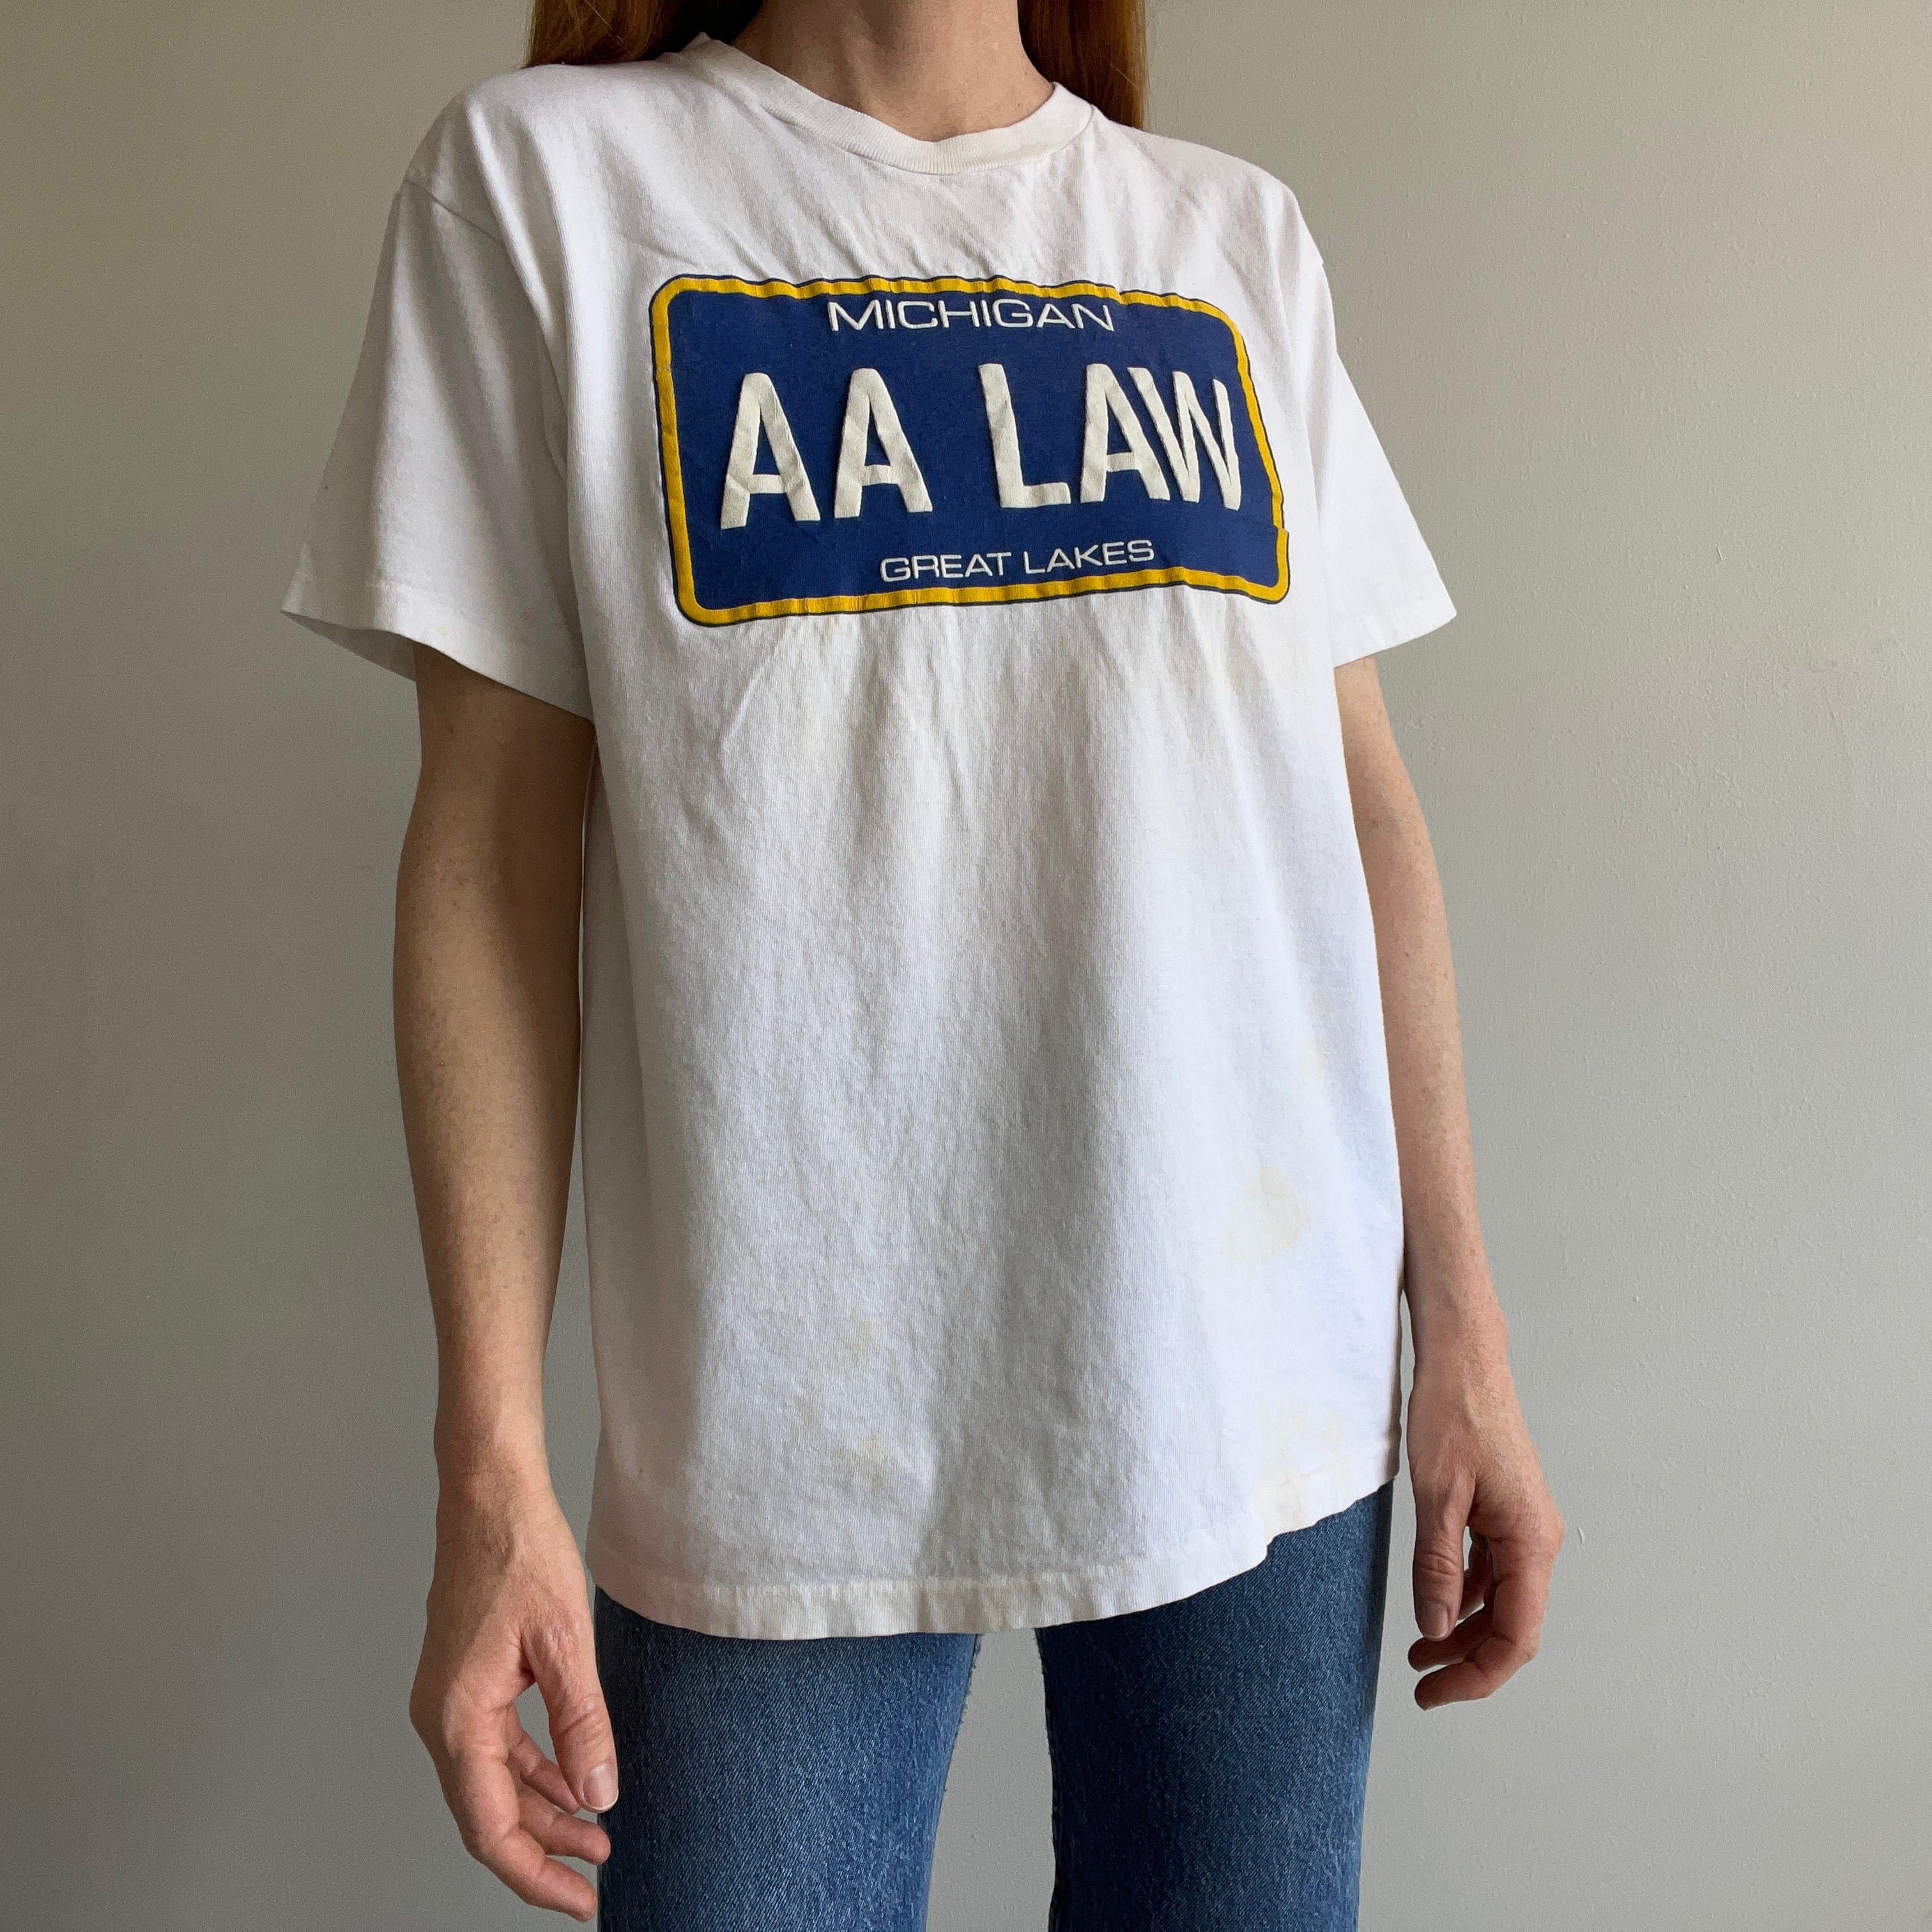 1980s AA Law T-Shirt